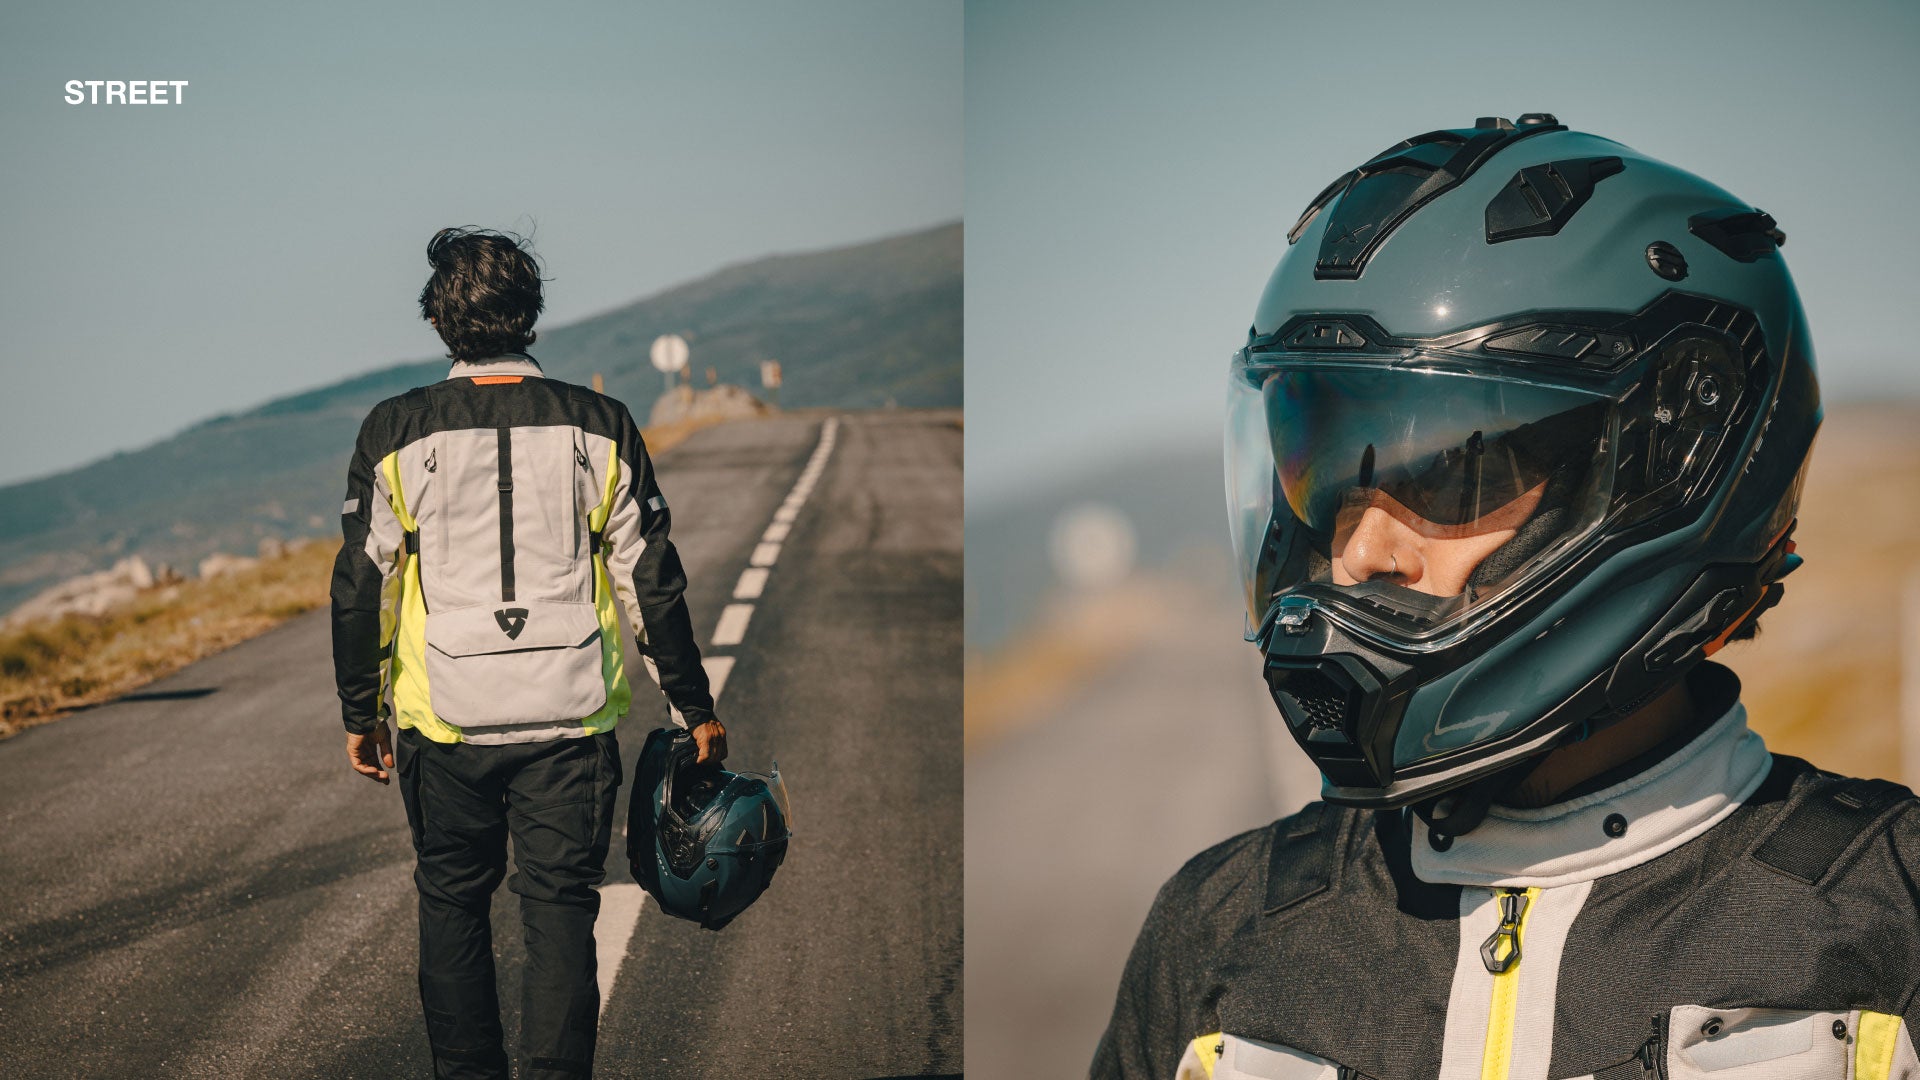 NEXX X.WED3 Trailmania Helmet (4 Colors)